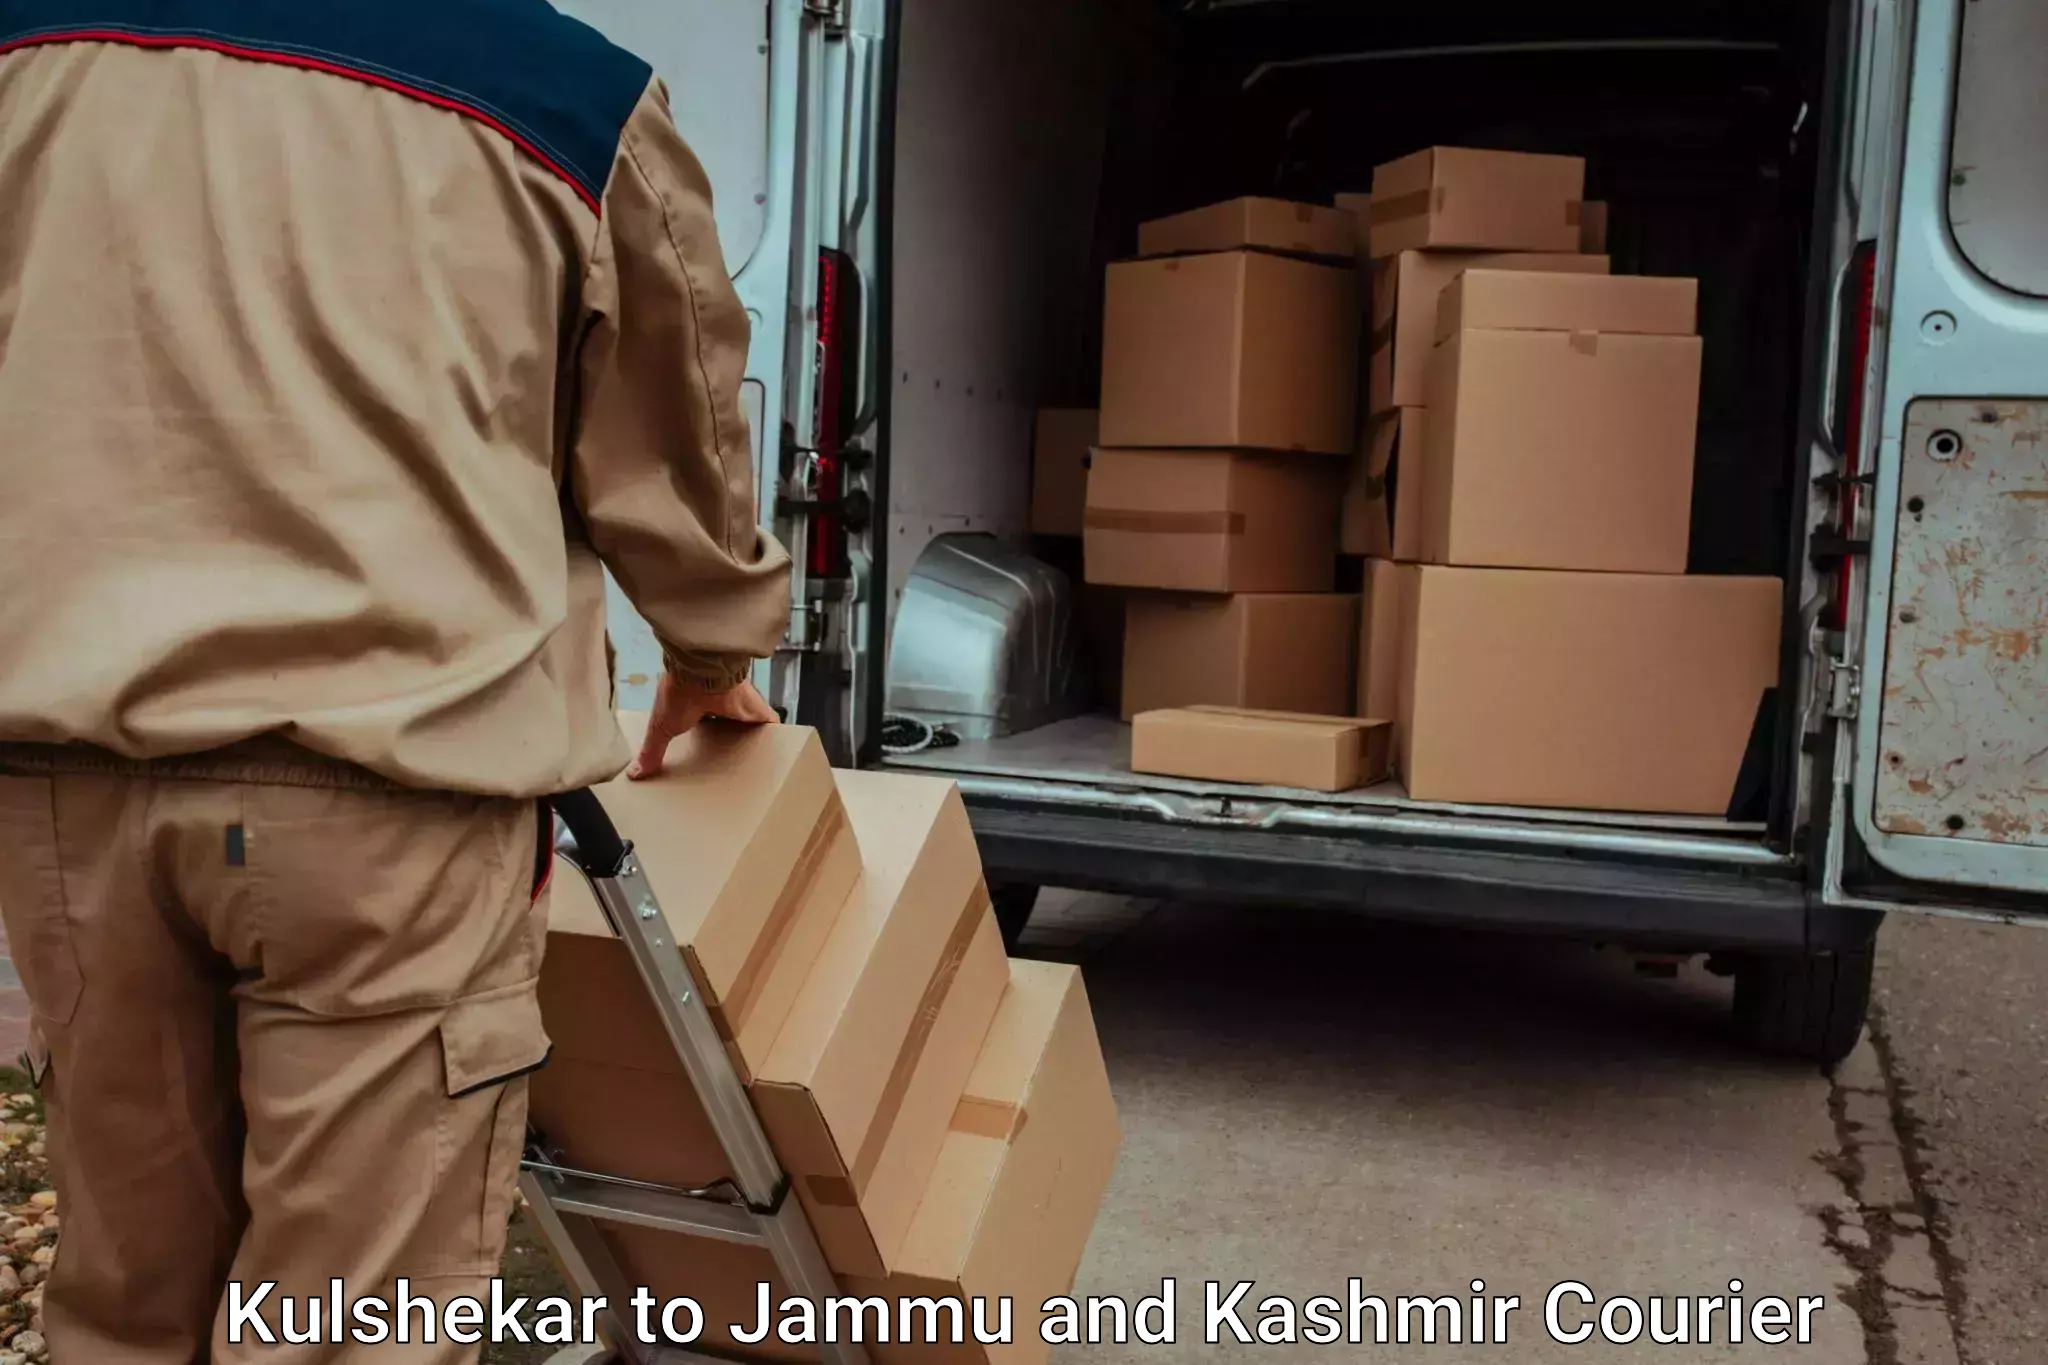 Luggage shipment specialists Kulshekar to Bohri